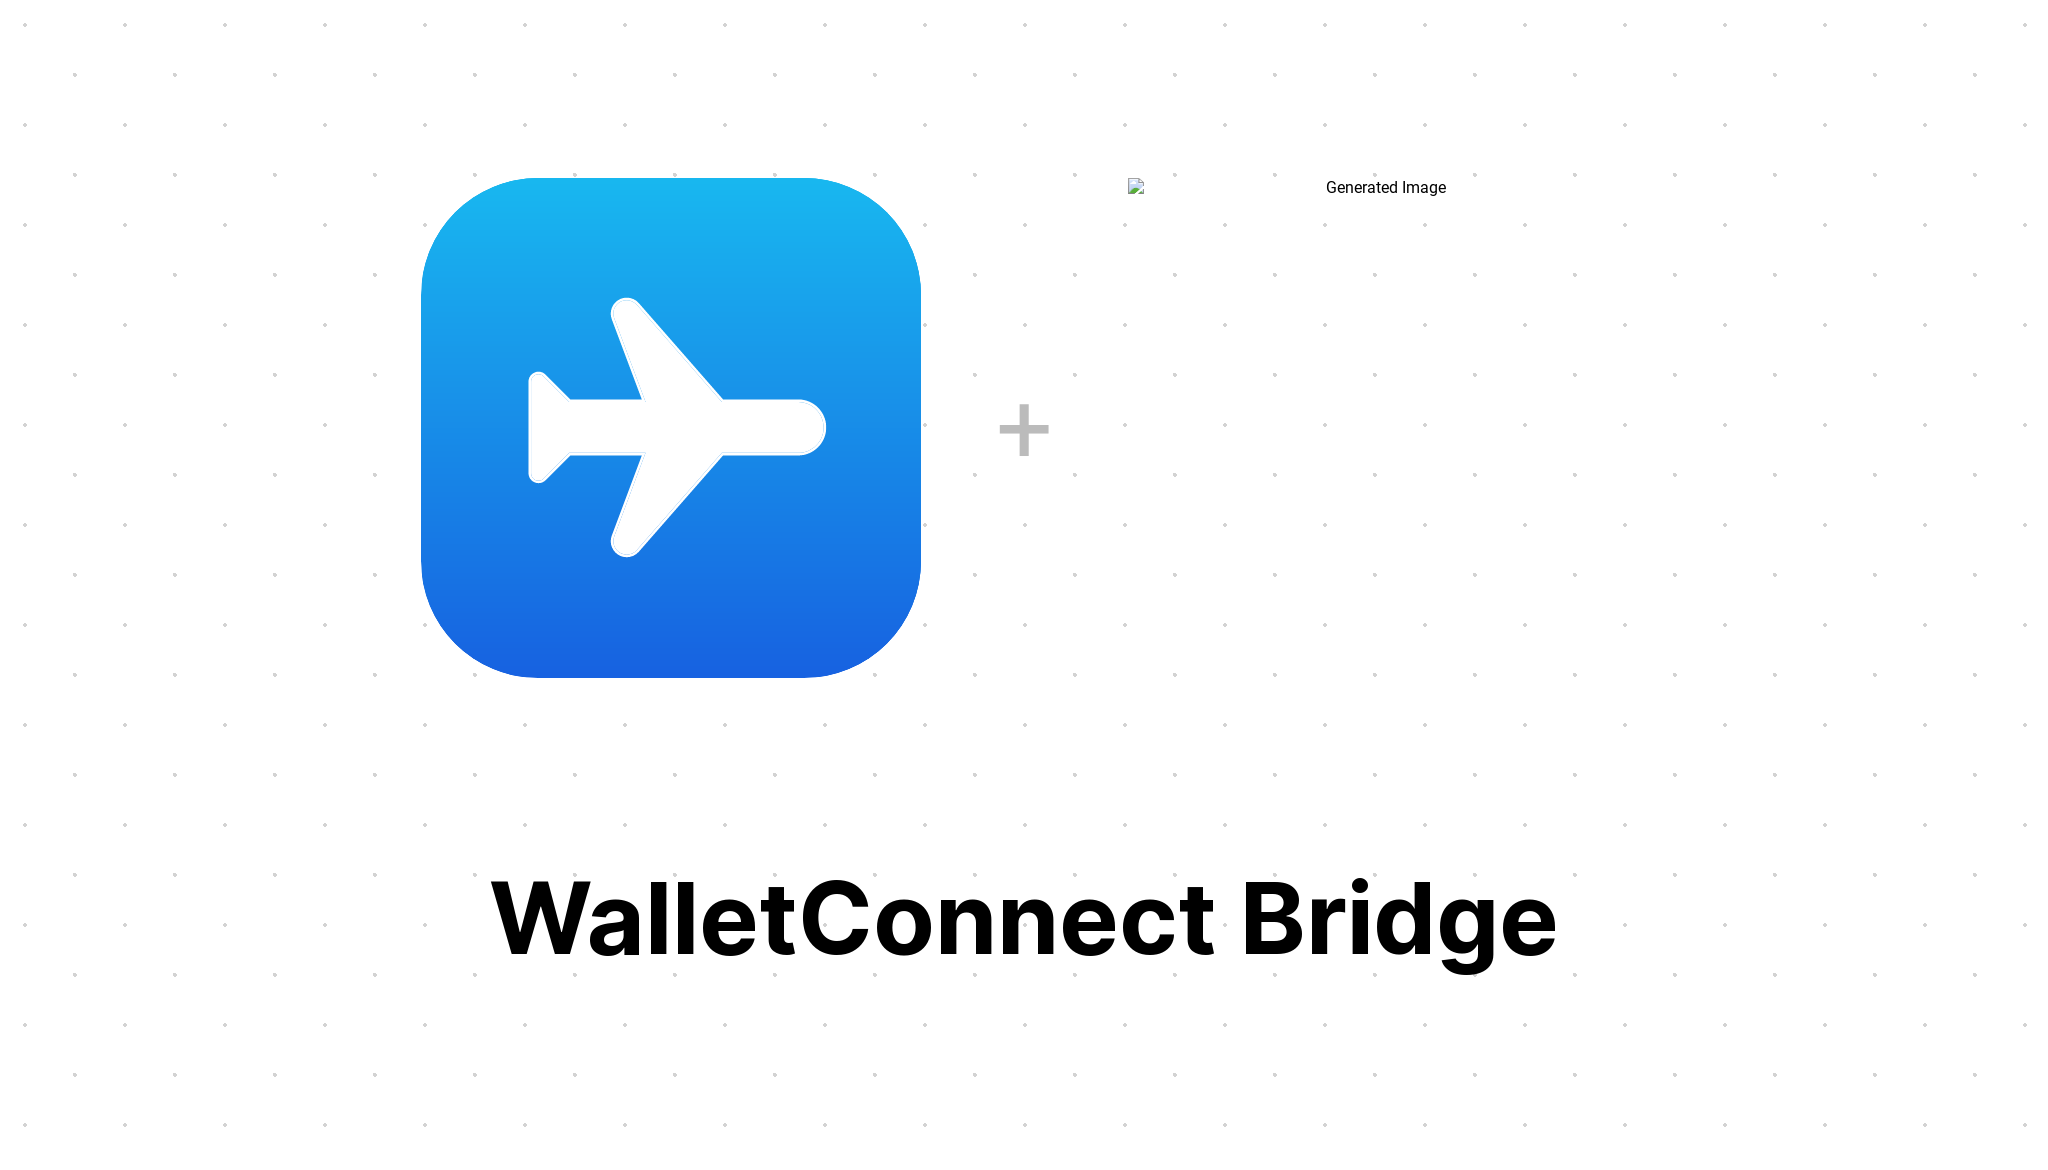 WalletConnect Bridge